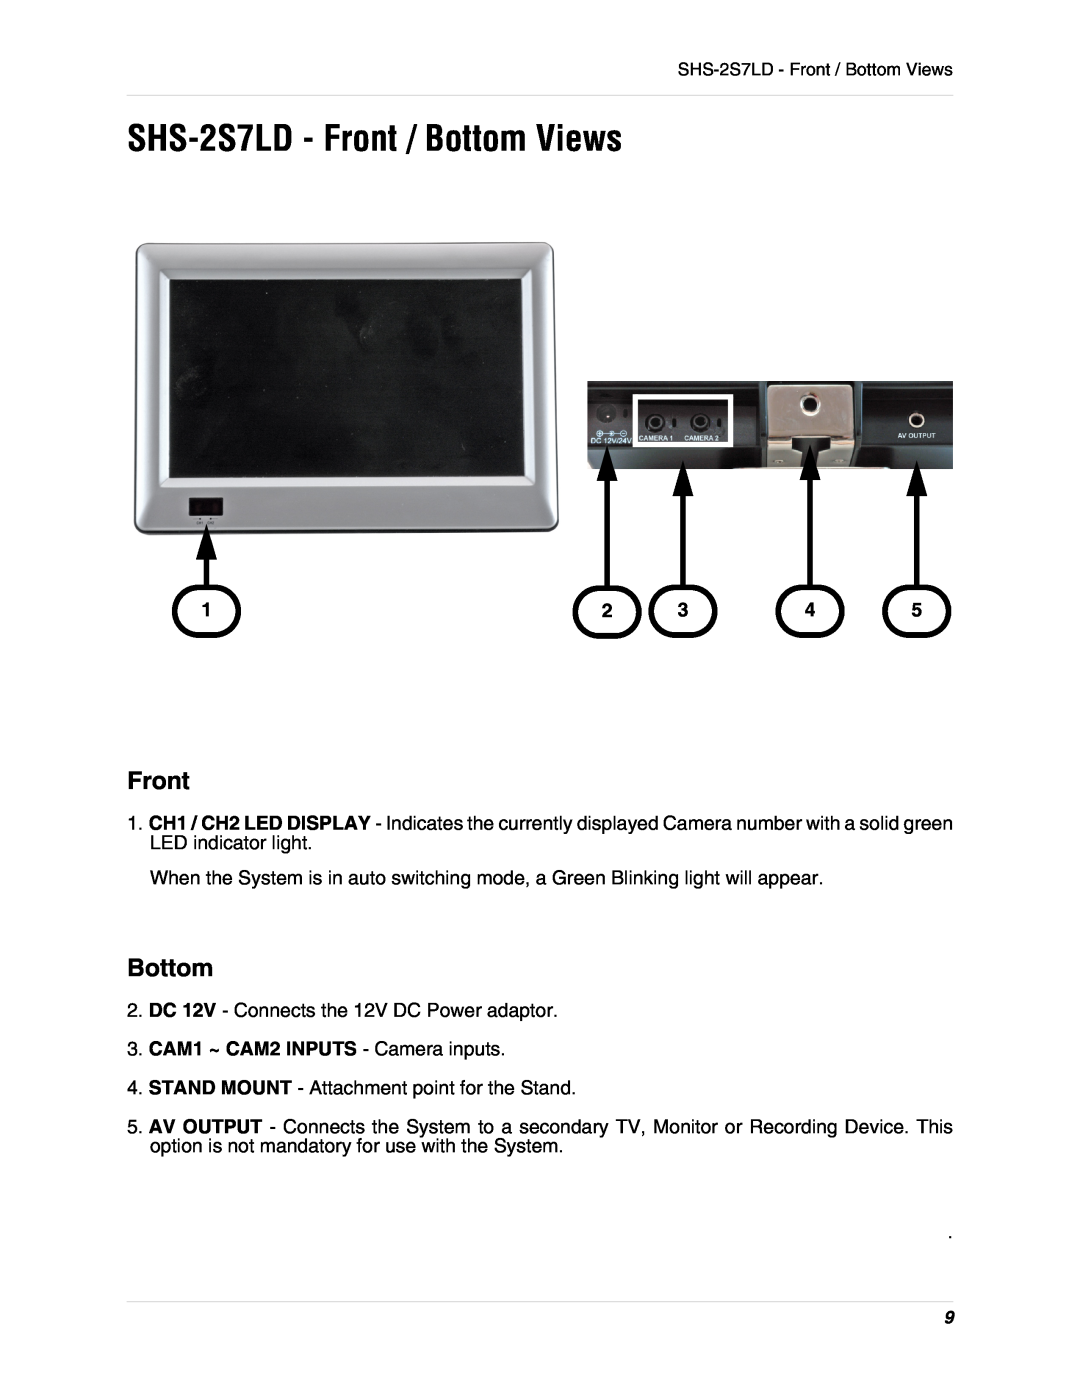 LOREX Technology SHS-2S7LD Series instruction manual SHS-2S7LD- Front / Bottom Views, 3.CAM1 ~ CAM2 INPUTS - Camera inputs 